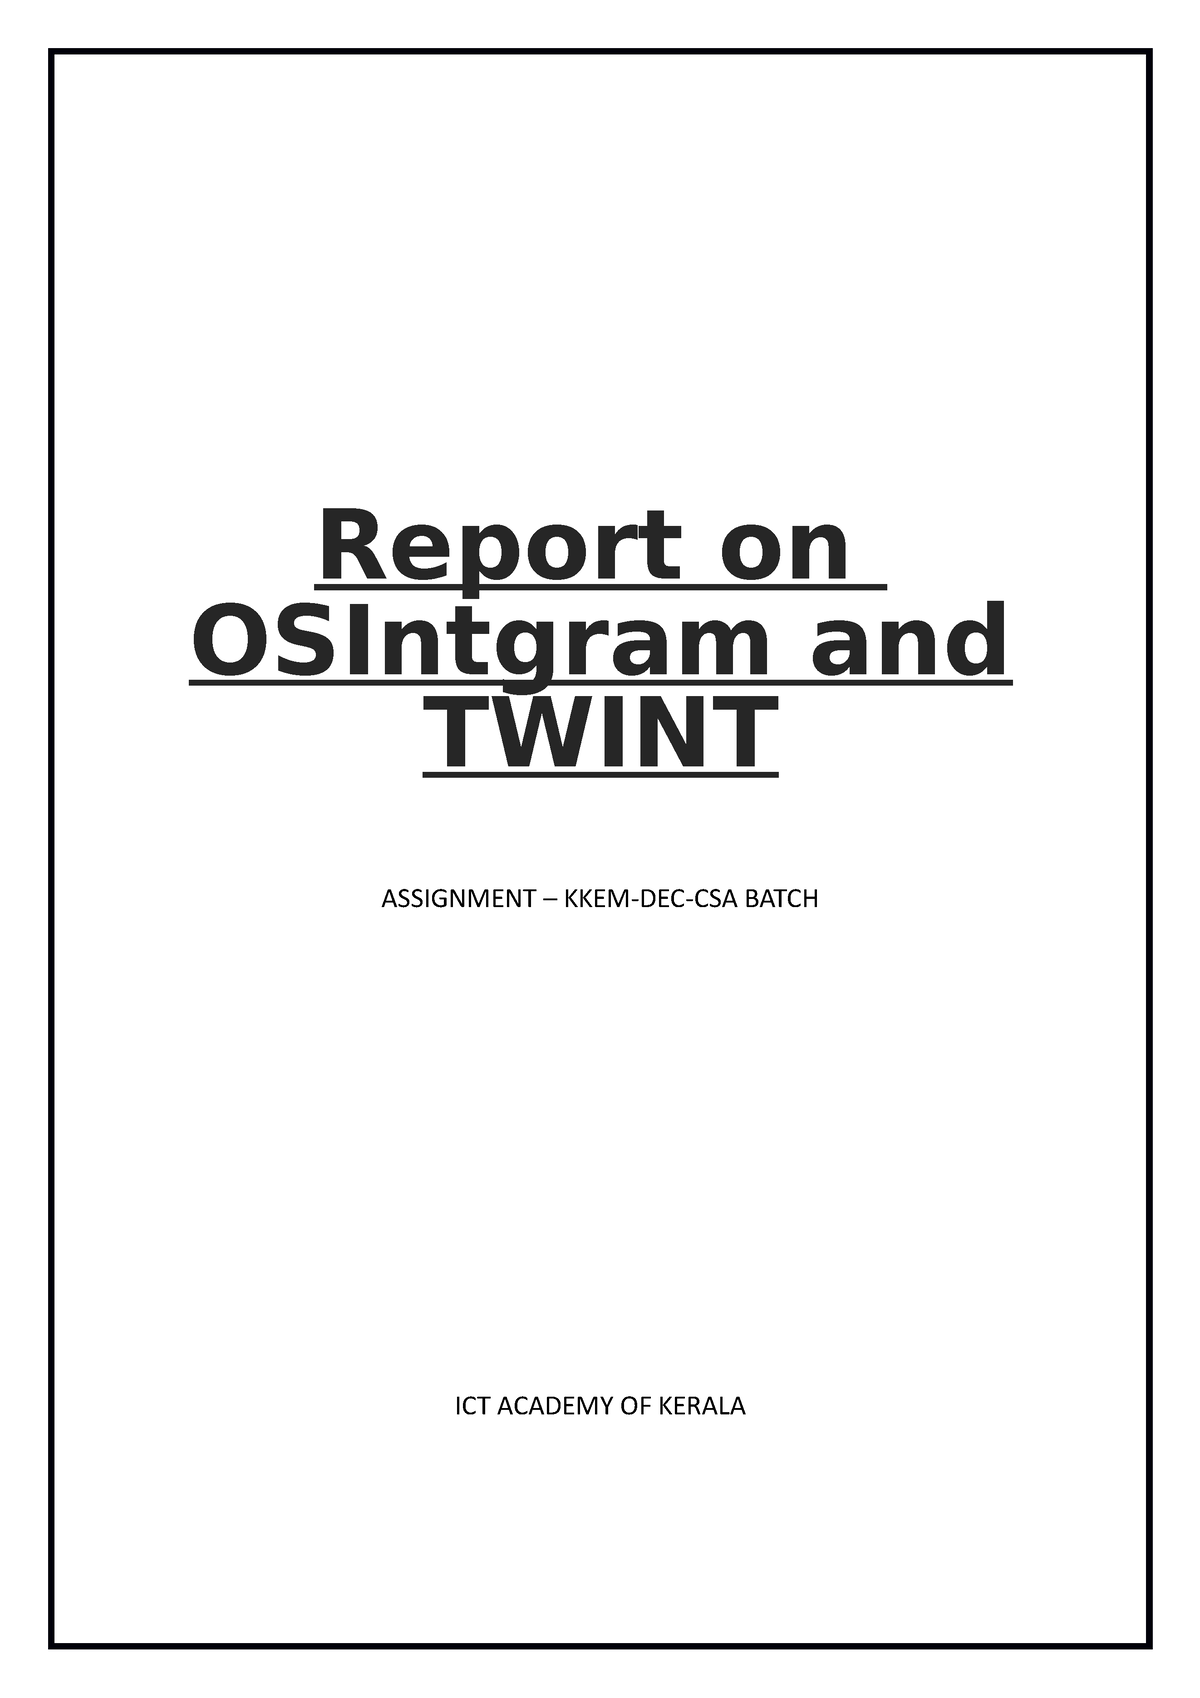 Osintgram is a OSINT tool on Instagram